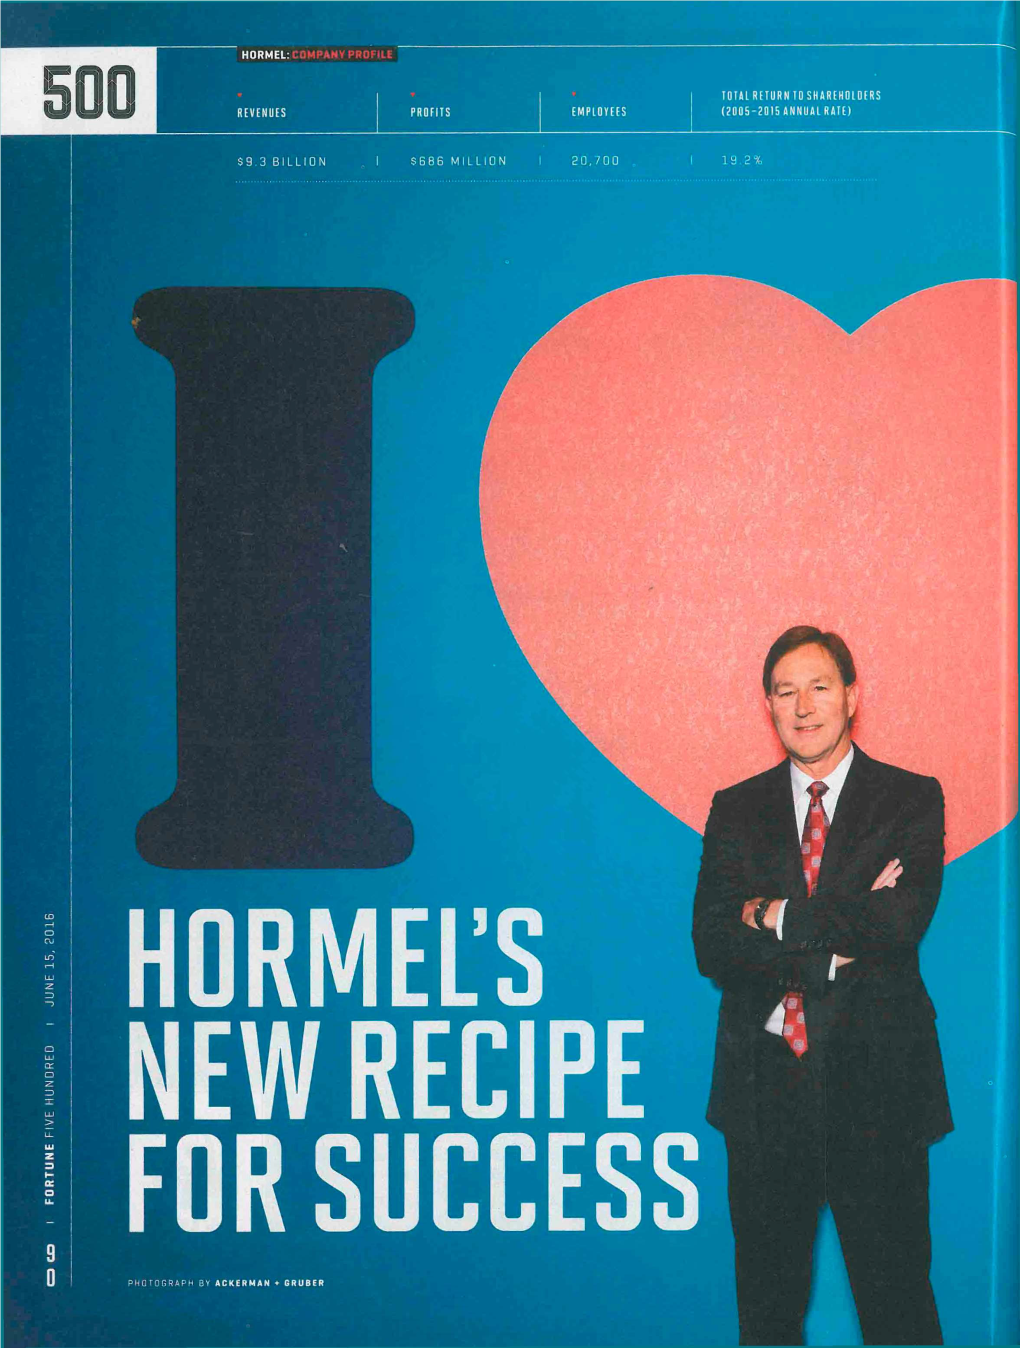 Hormel: Company Profile '